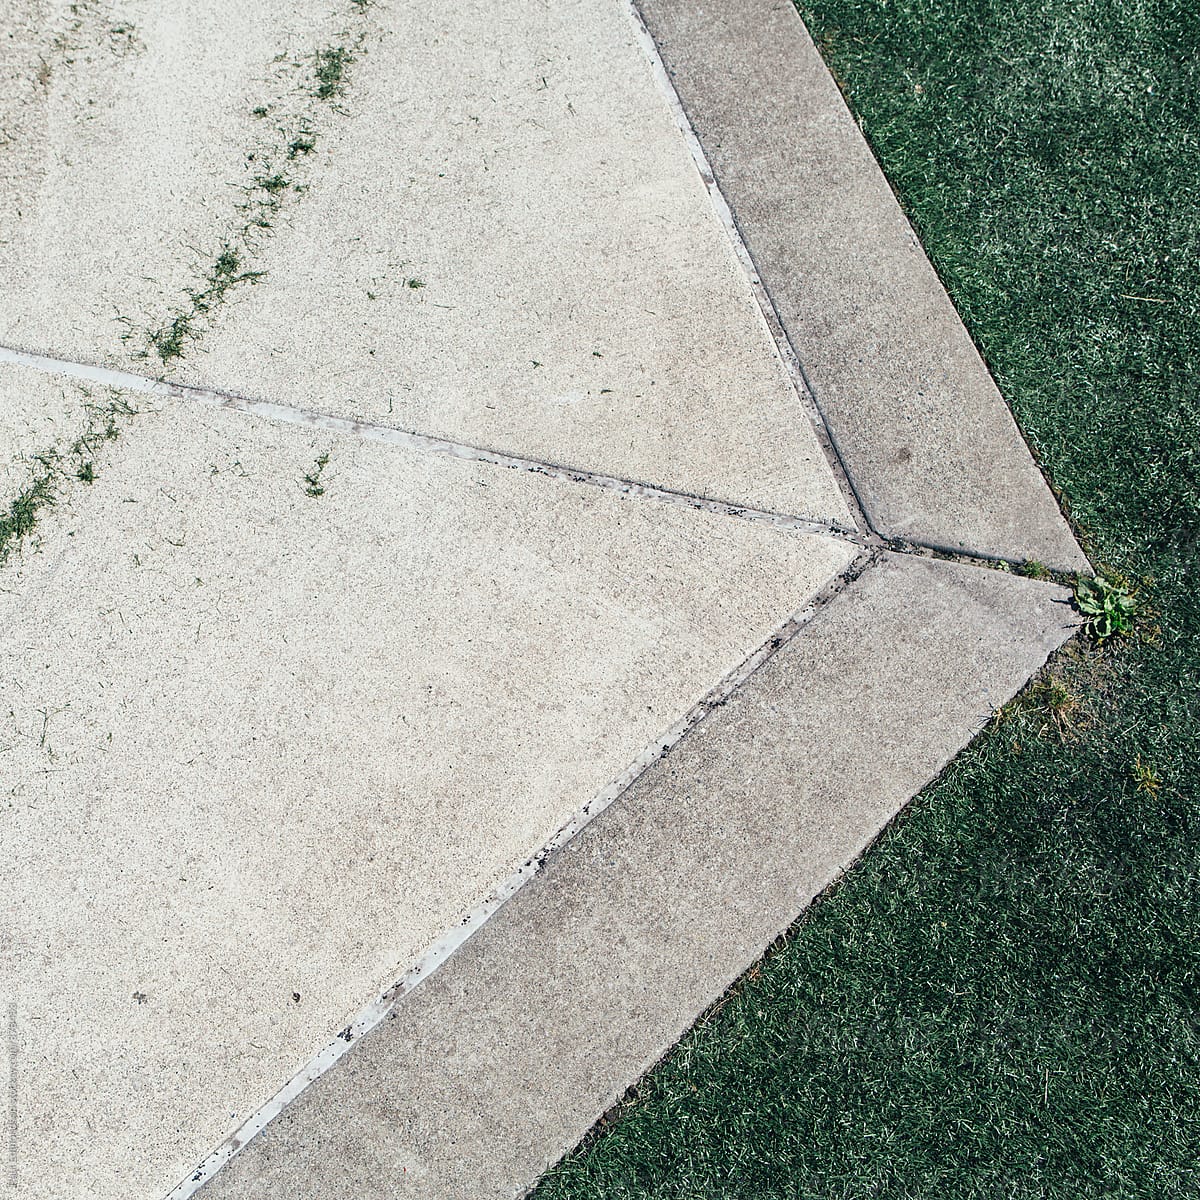 Sidewalk along edge of artificial turf sports field, close up